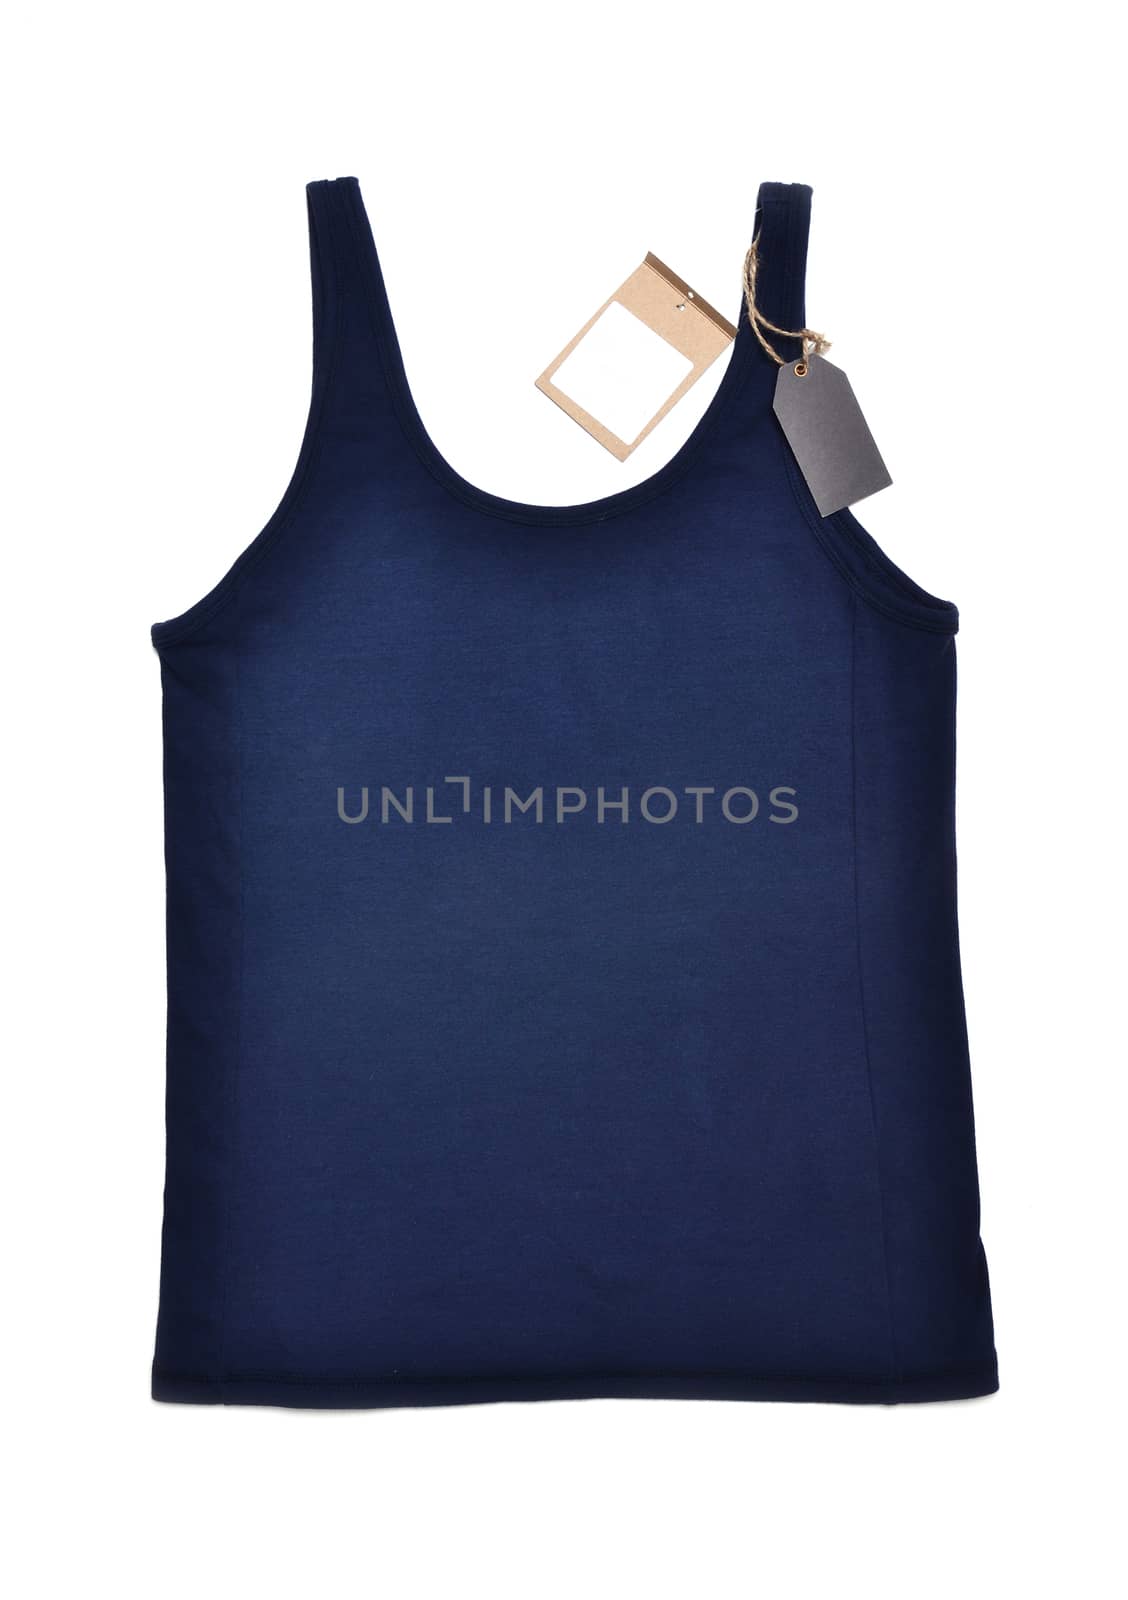 undershirtshirt with price tag by anankkml